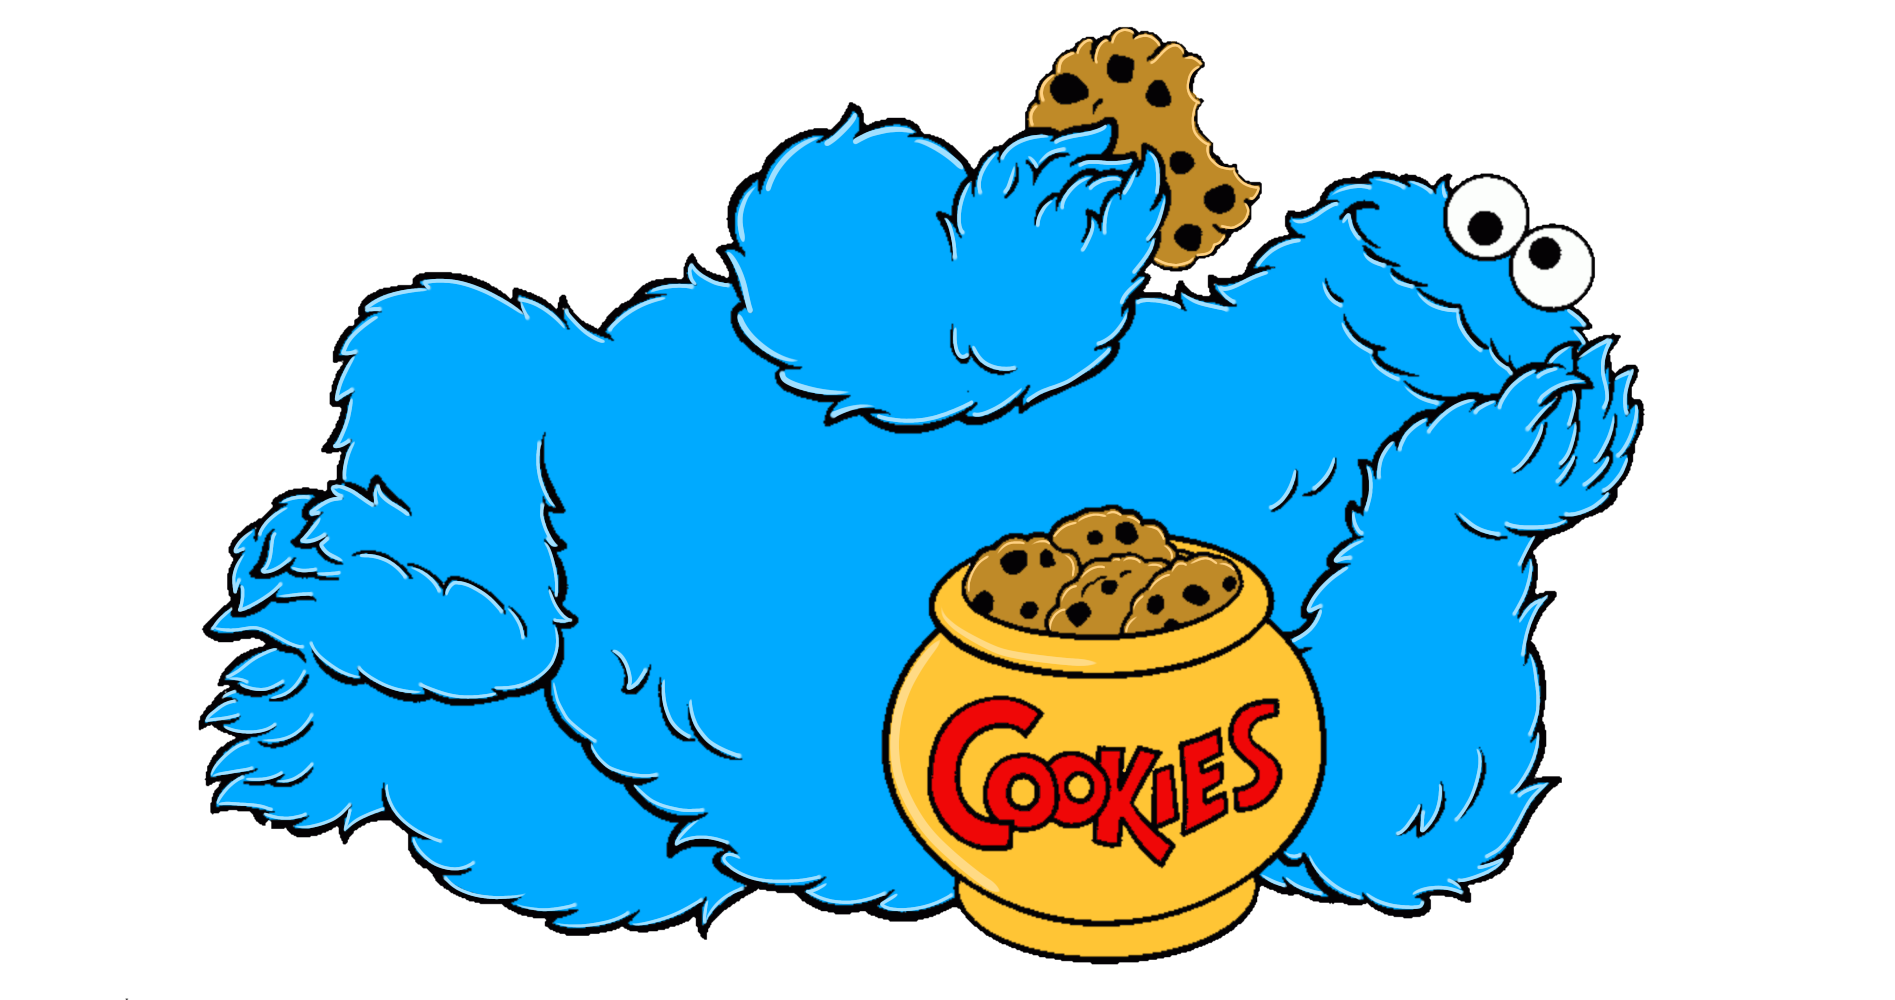 Rare Cookie Monster clipart (Sesame Street) by mcdnalds2016 on